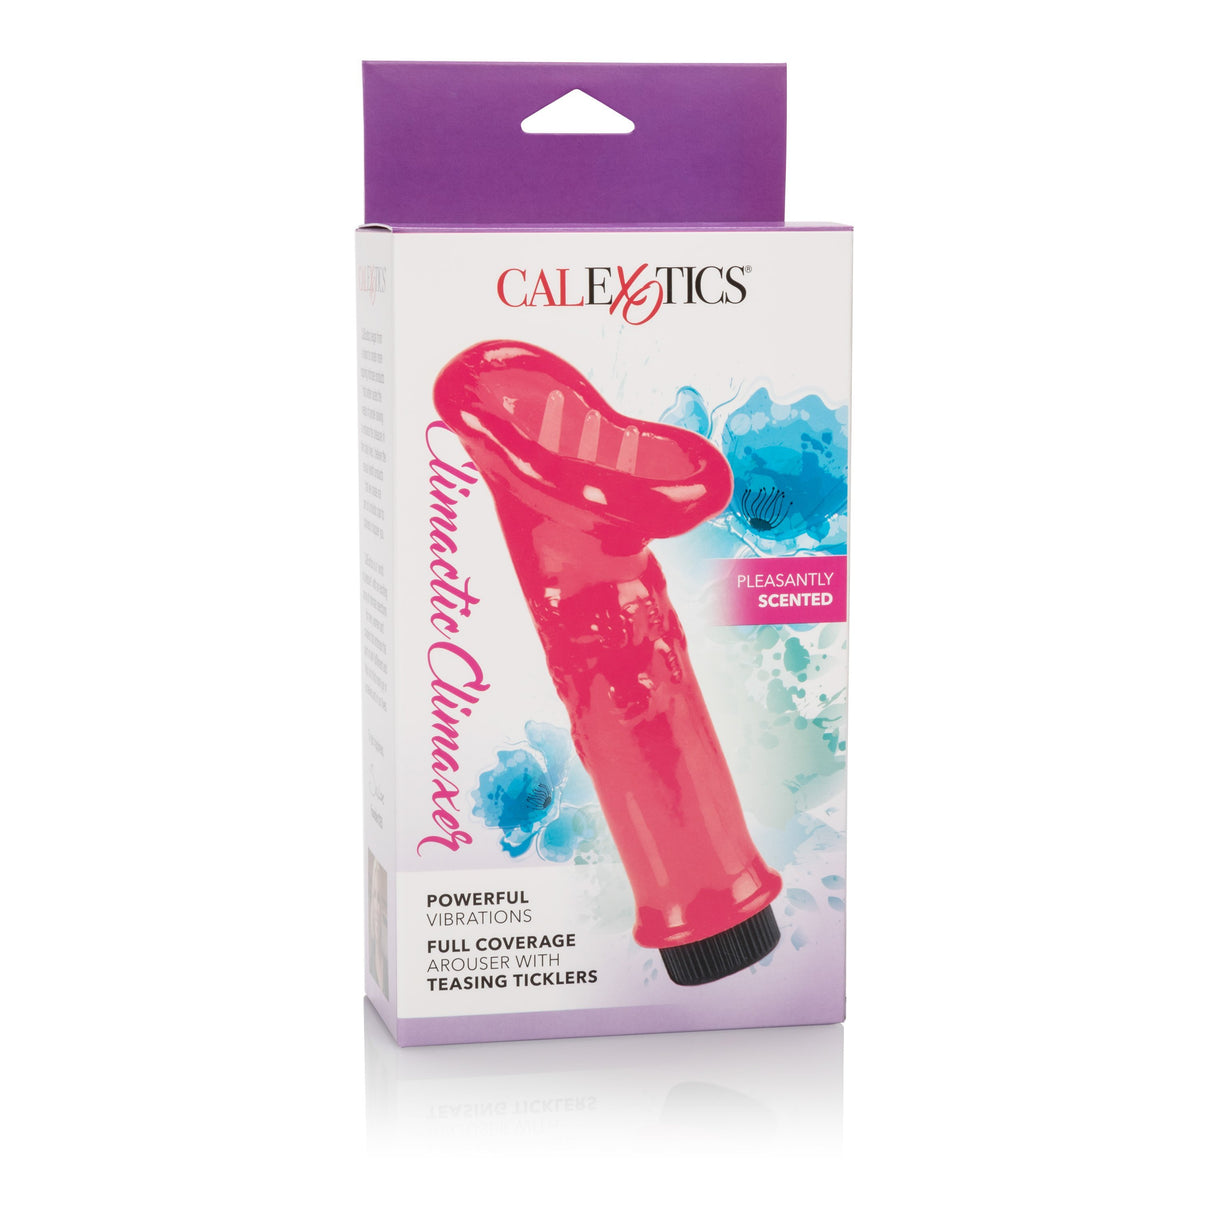 California Exotics - Climactic Climaxer Clit Massager (Pink) CE1419 CherryAffairs